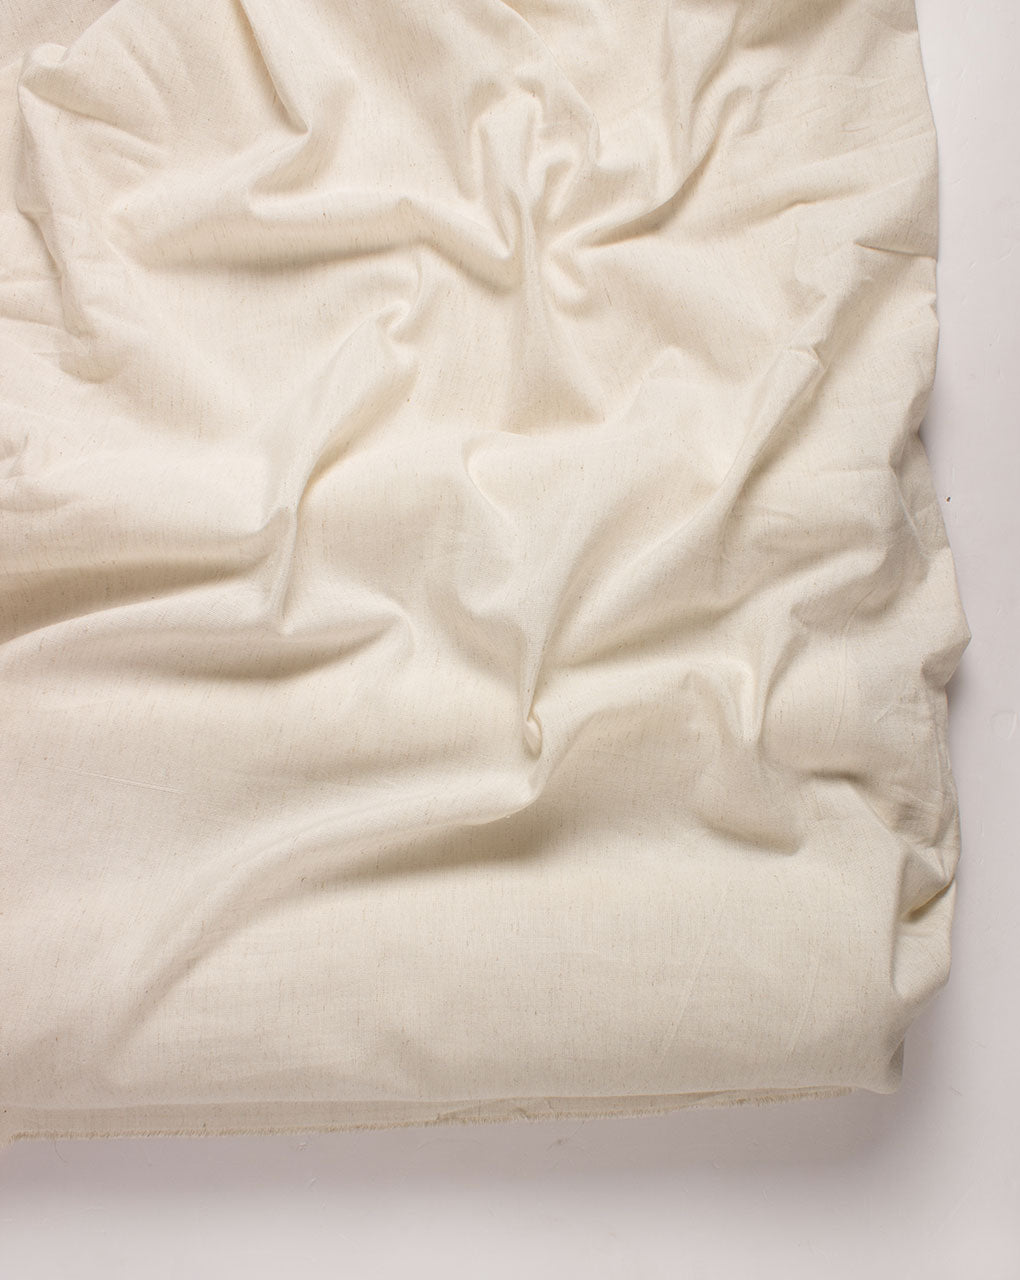 2/40’S VSF x 12’S C/Flex (56 x 44) Viscose-Cotton Flex Plain Fabric - Fabriclore.com